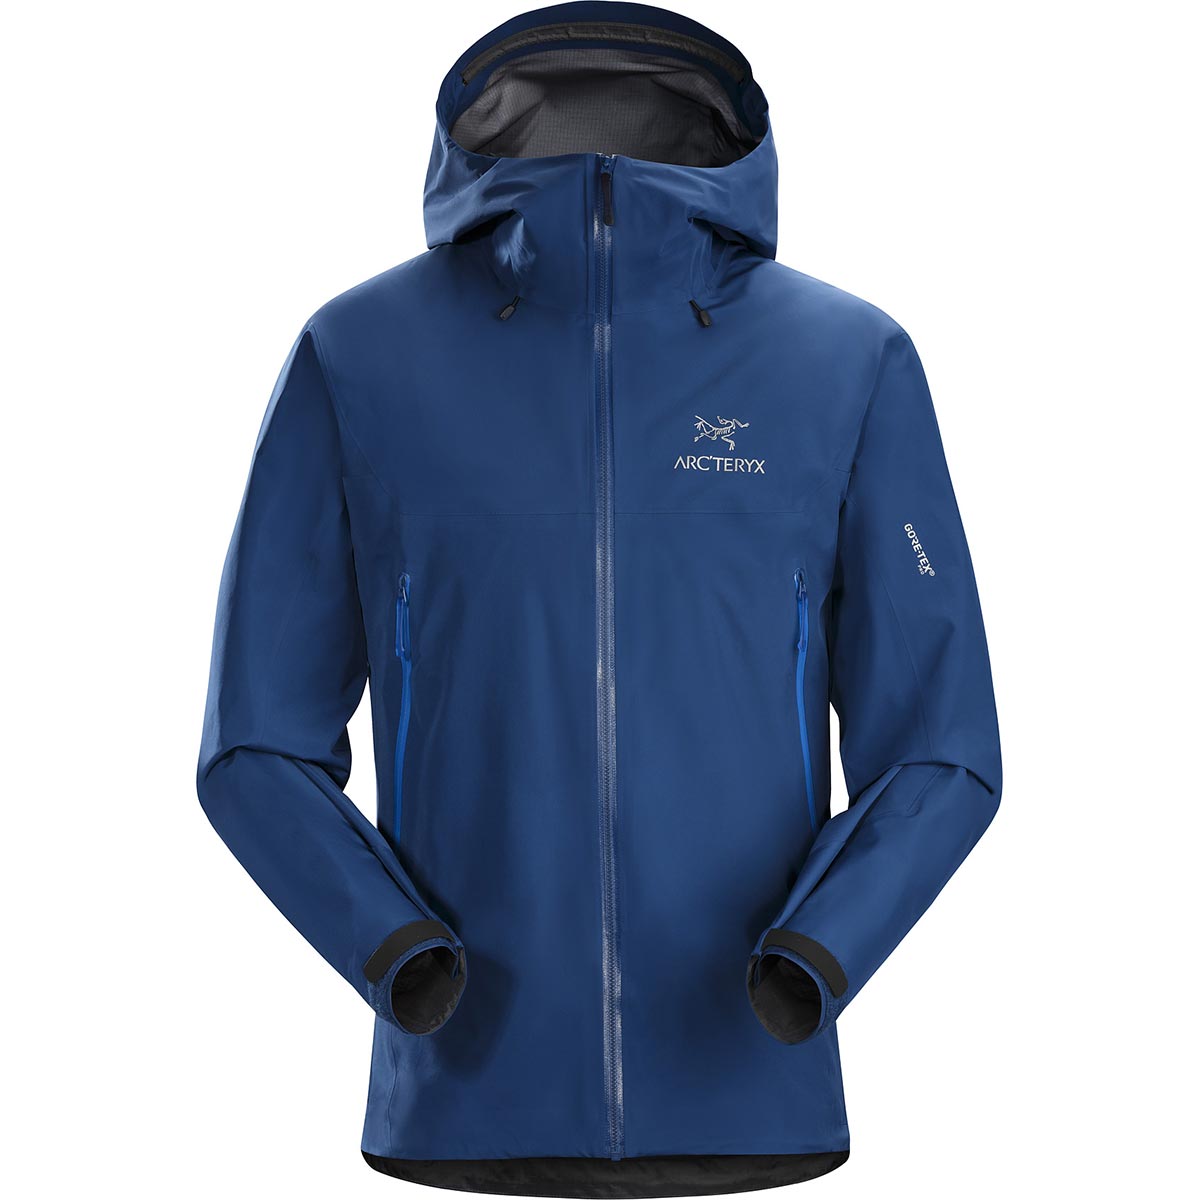 Arc'teryx Beta LT Jacket, men's, discontinued Spring 2018 colors